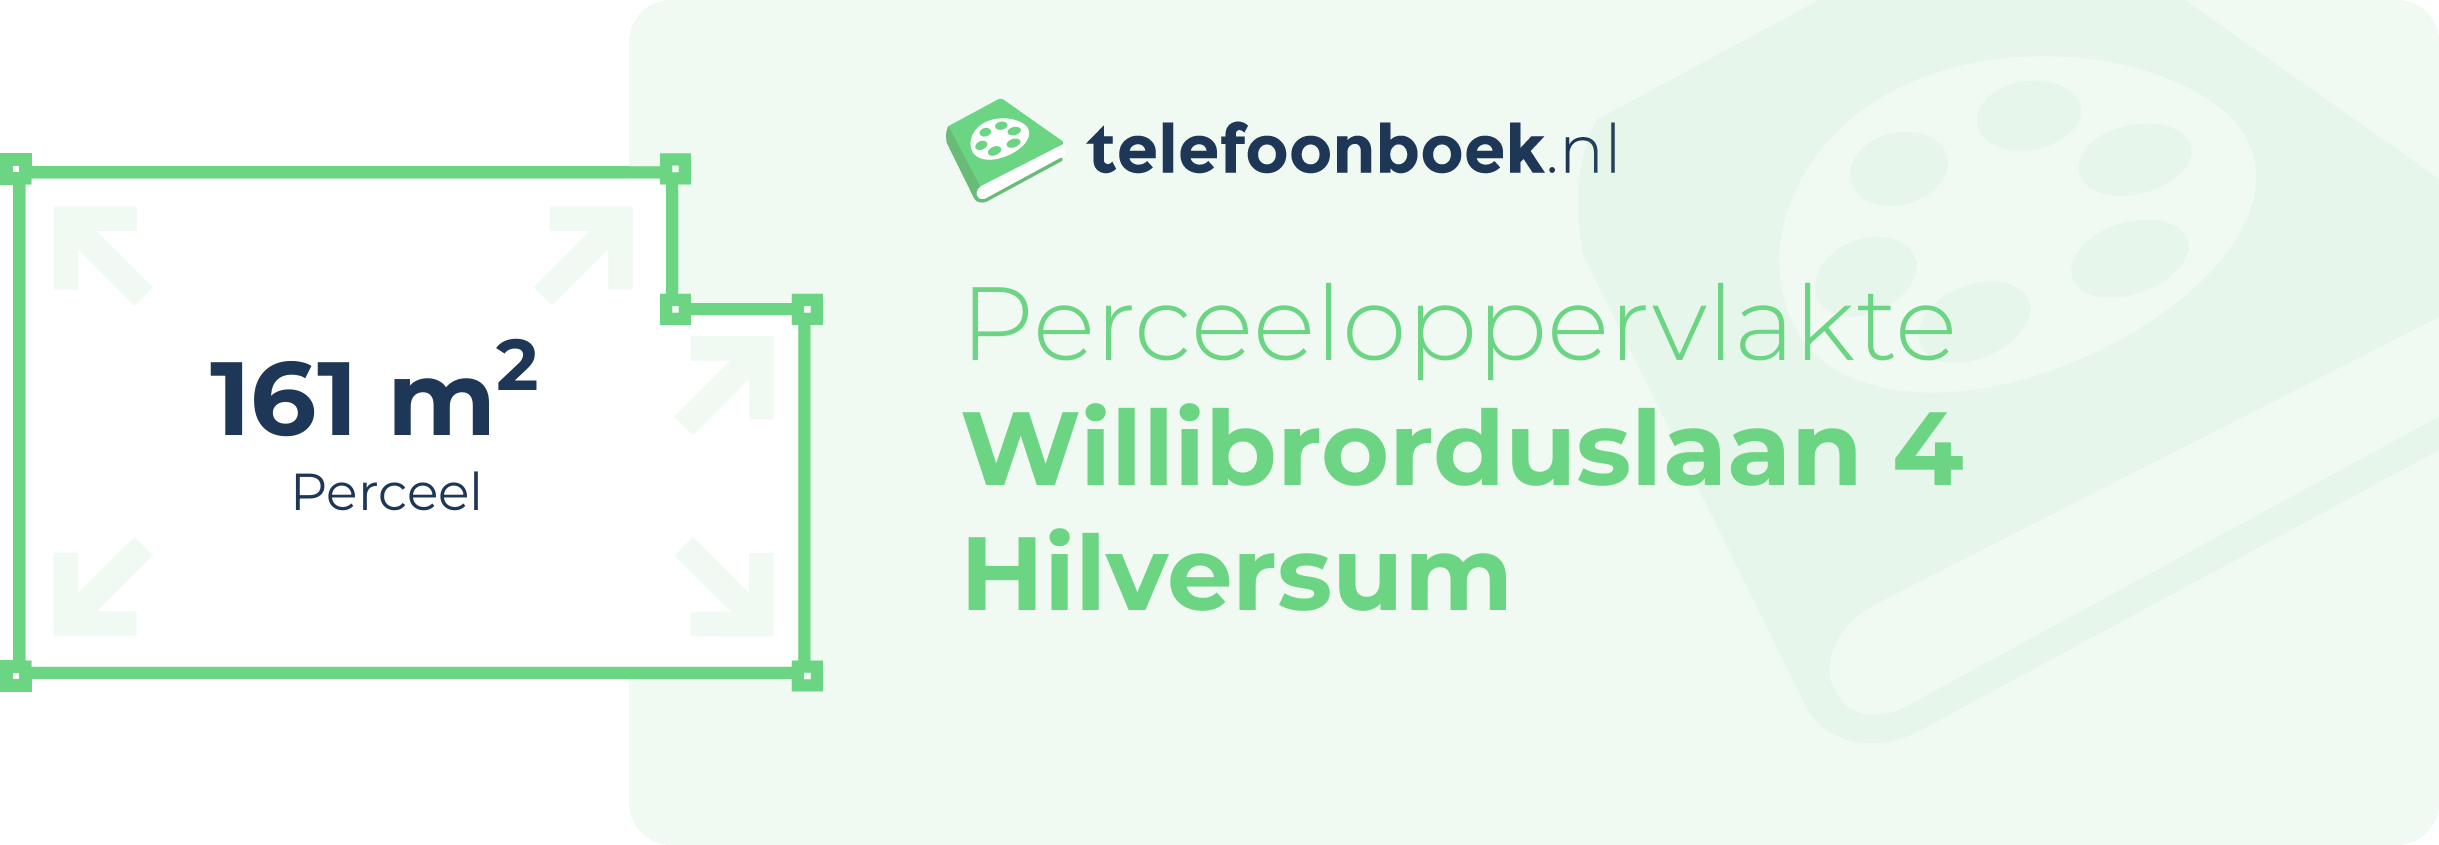 Perceeloppervlakte Willibrorduslaan 4 Hilversum